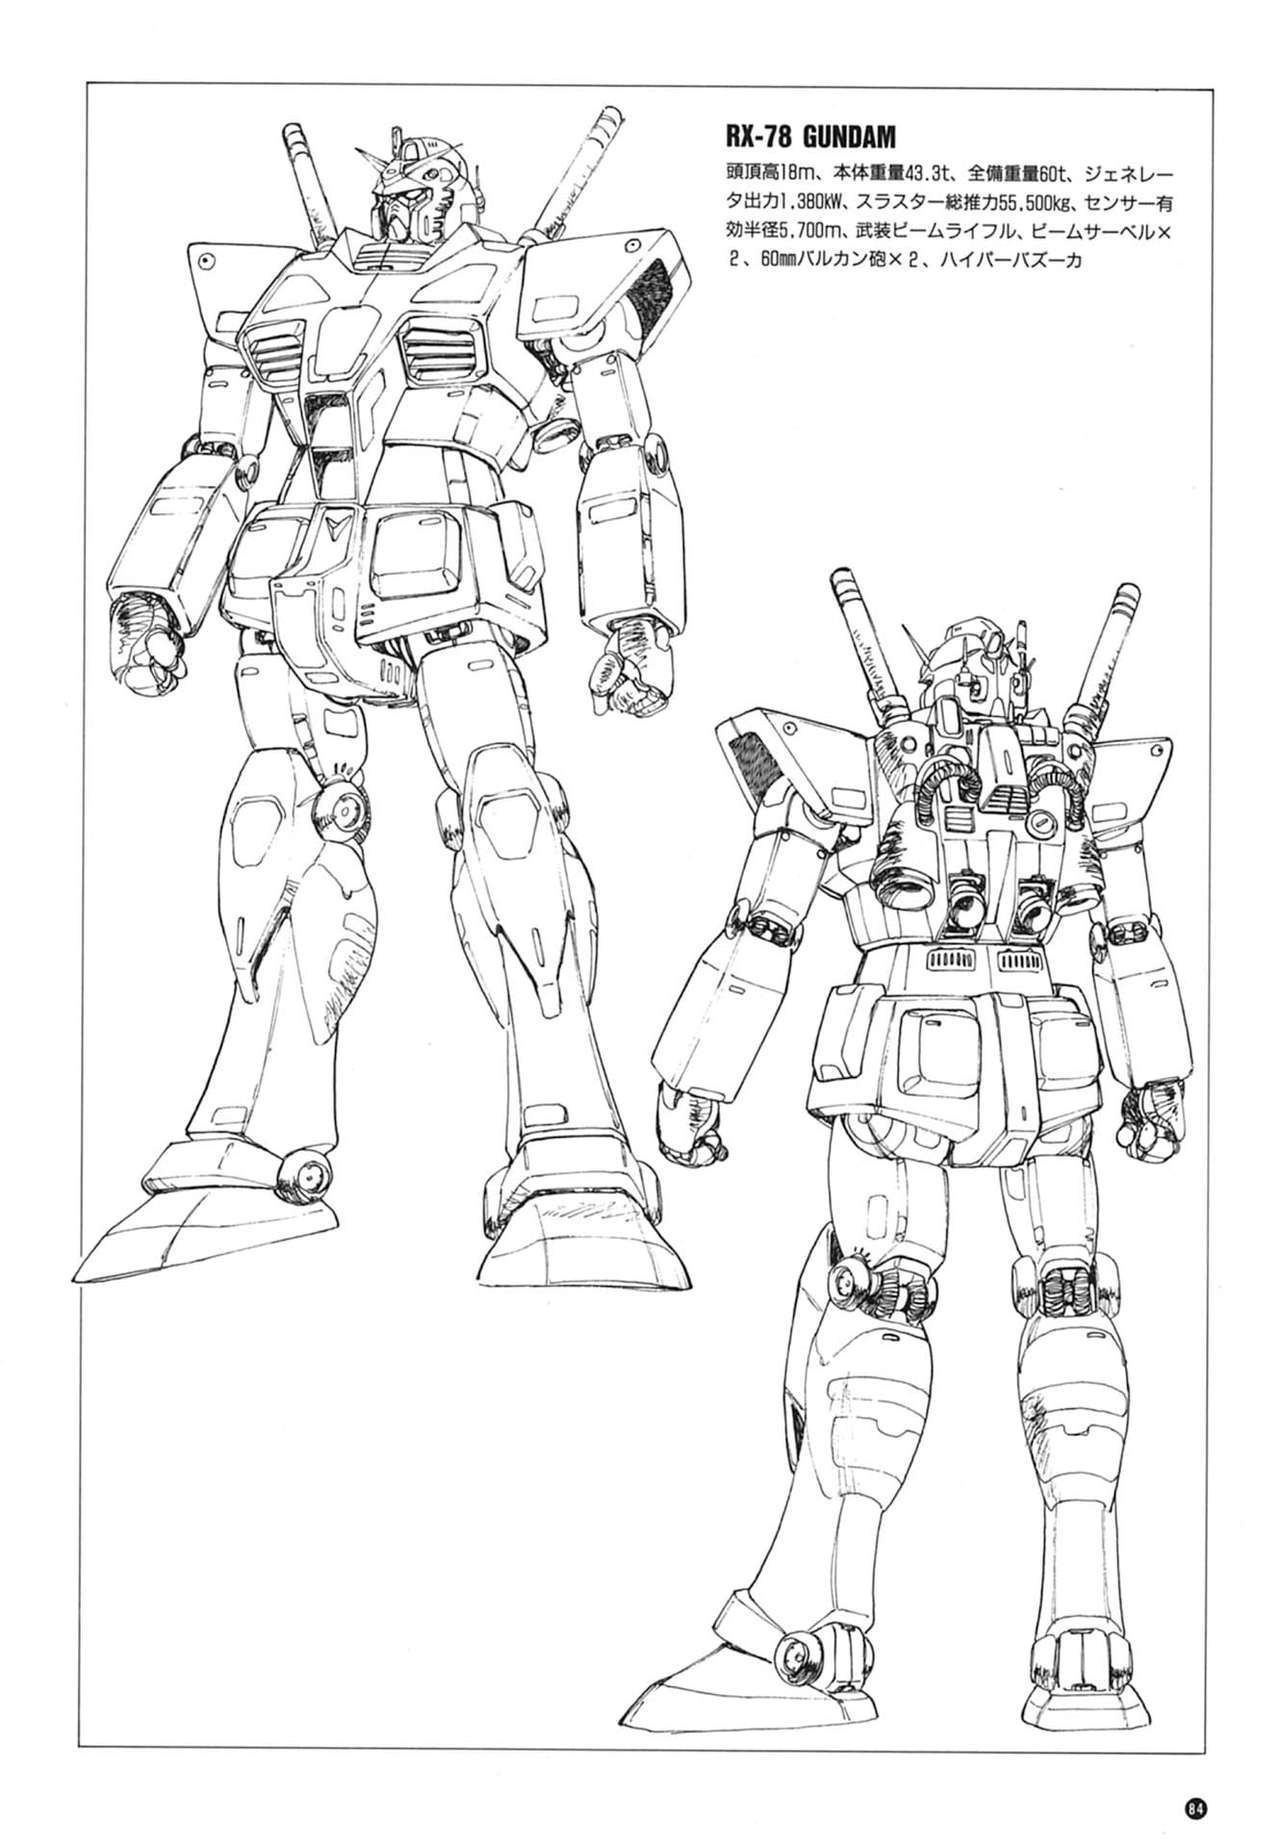 [Kazuhisa Kondo] Kazuhisa Kondo 2D & 3D Works - Go Ahead - From Mobile Suit Gundam to Original Mechanism 83